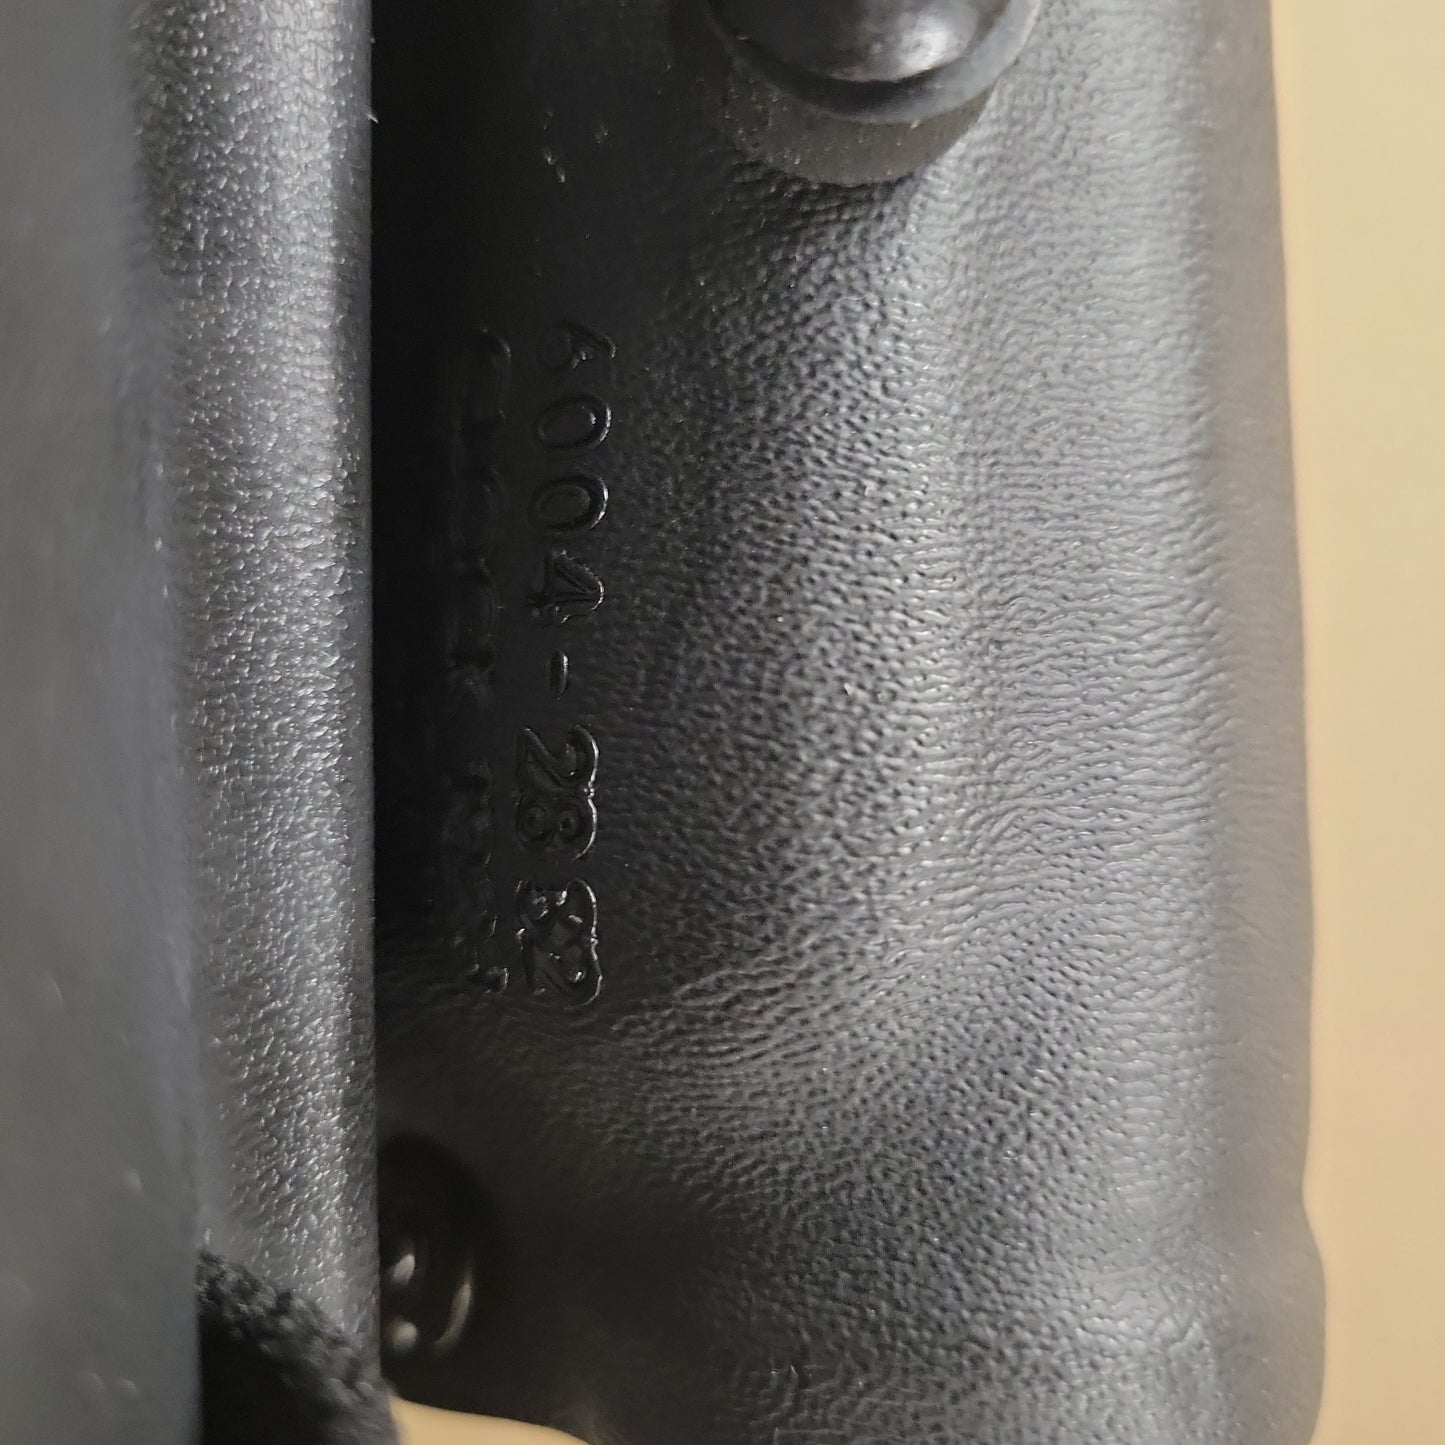 Safariland Tactical Leg Holster For Glock 19/19X/45 Gen3-5, 23 Gen3-4 w/TLR1